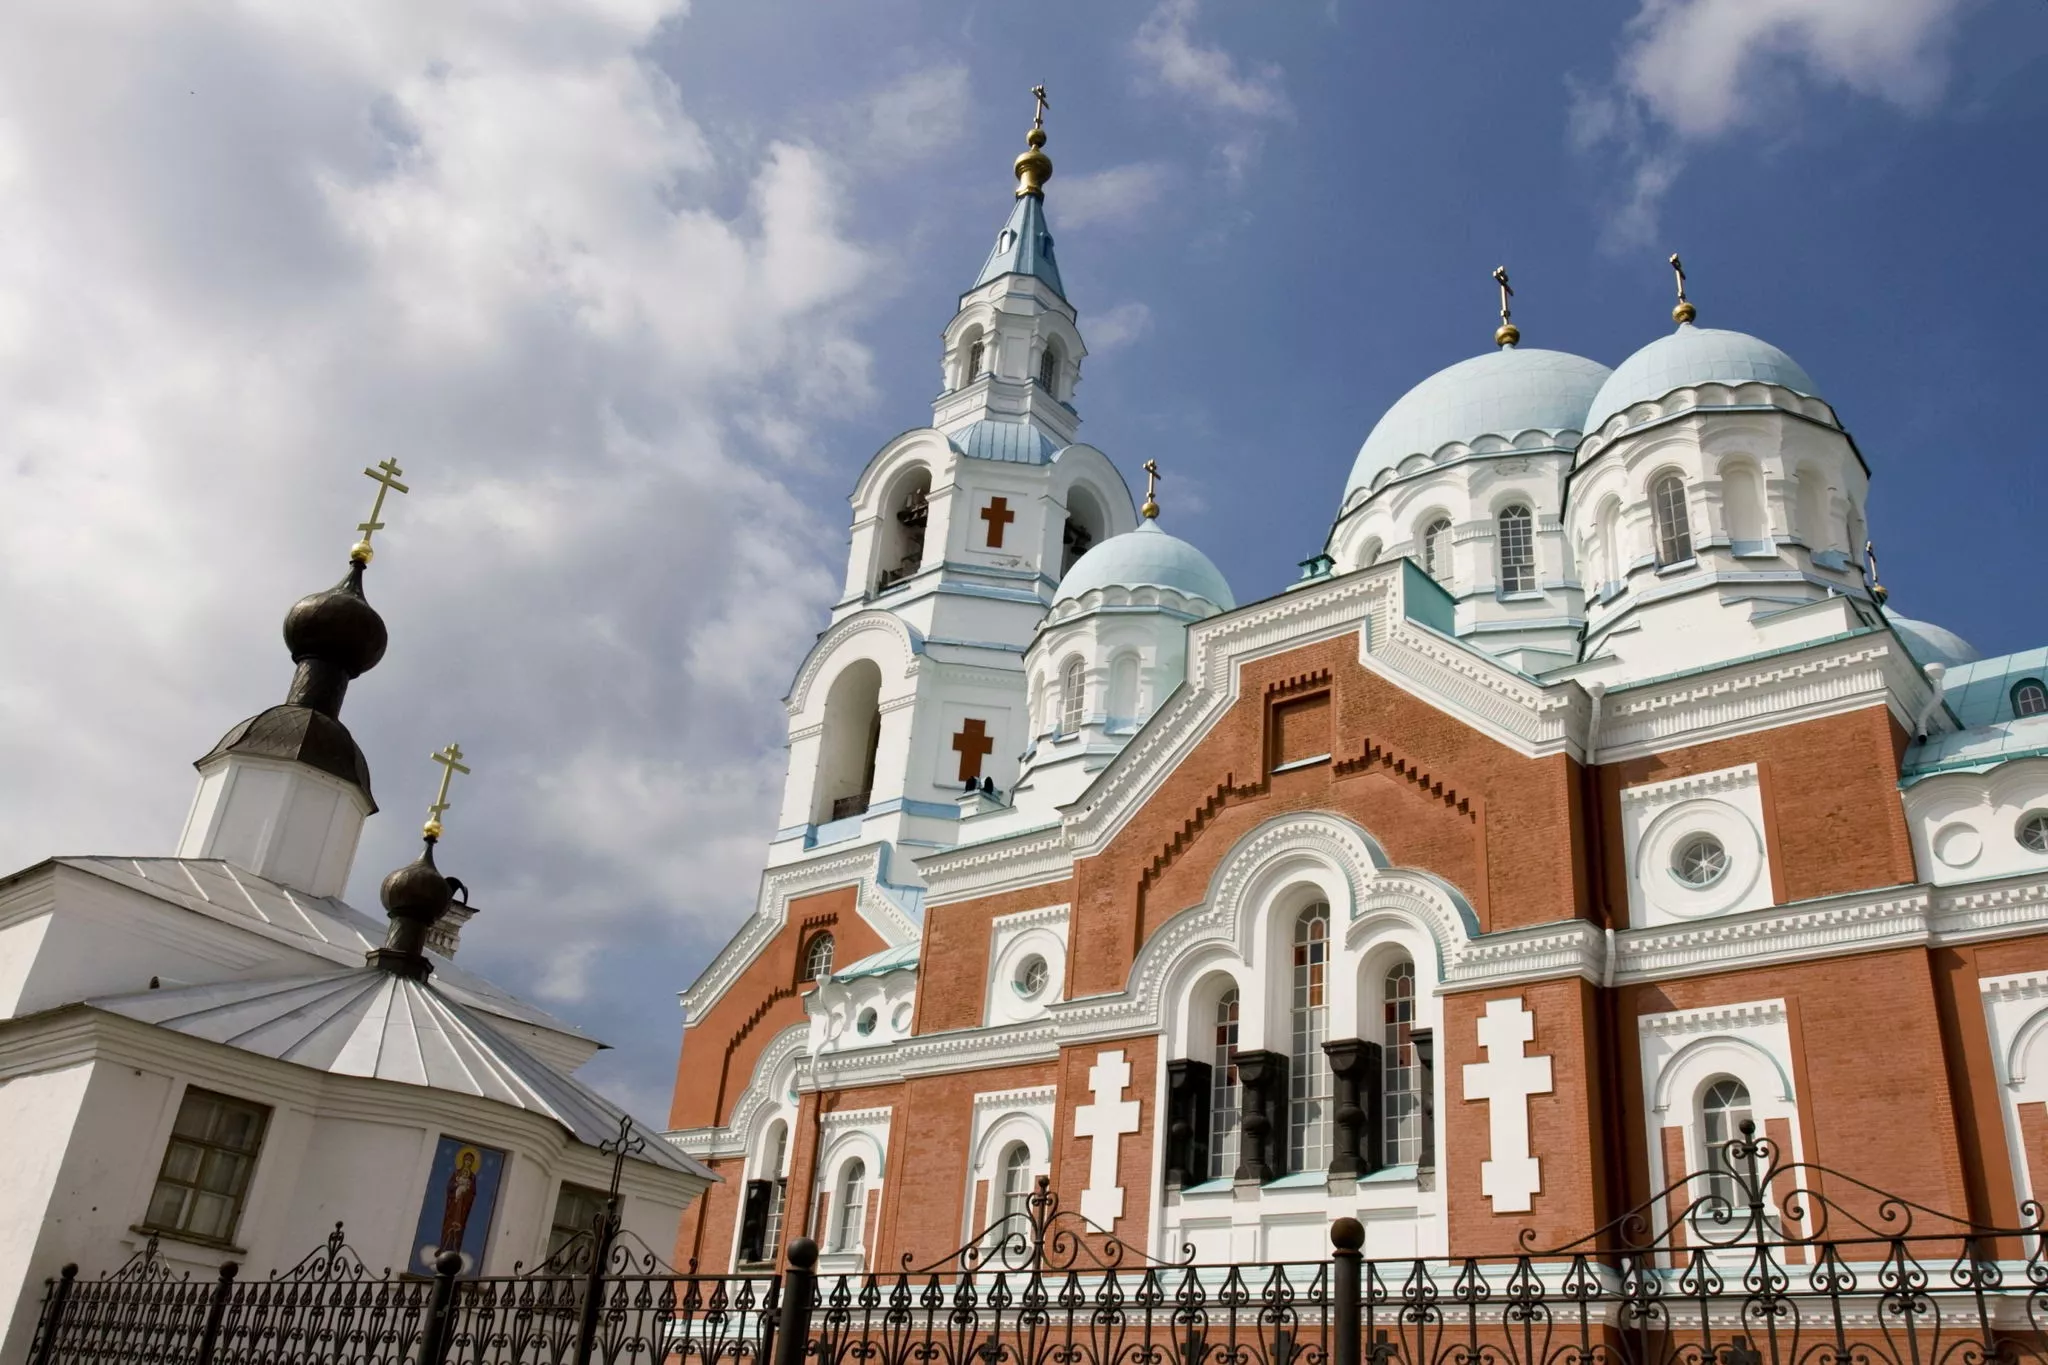 Spaso-Preobrazhensky Cathedral in Ukraine, Europe | Architecture - Rated 3.9